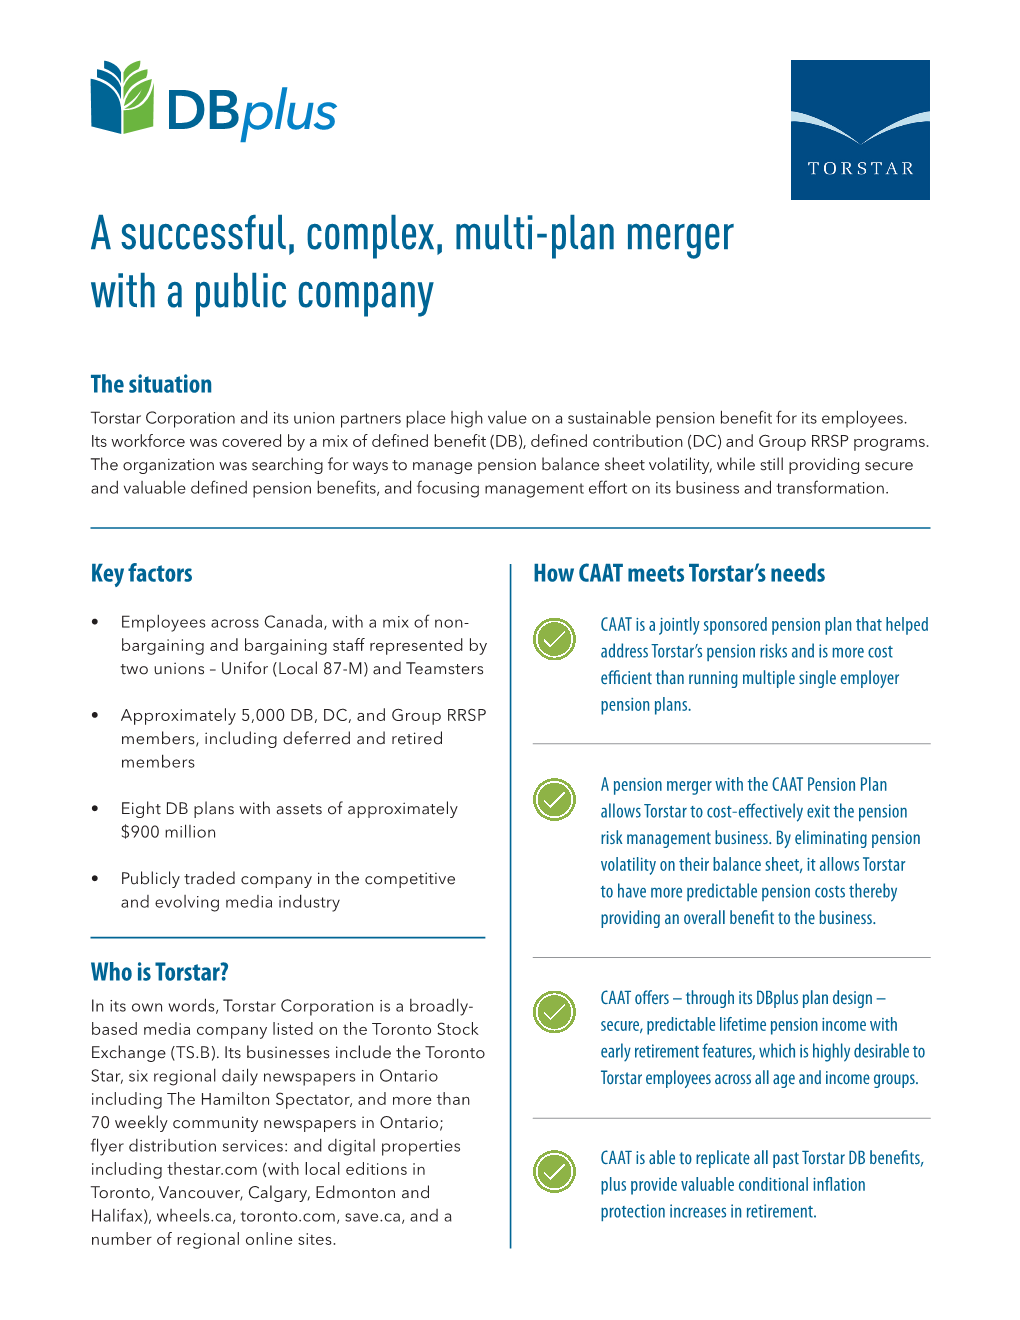 A Successful, Complex, Multi-Plan Merger with a Public Company